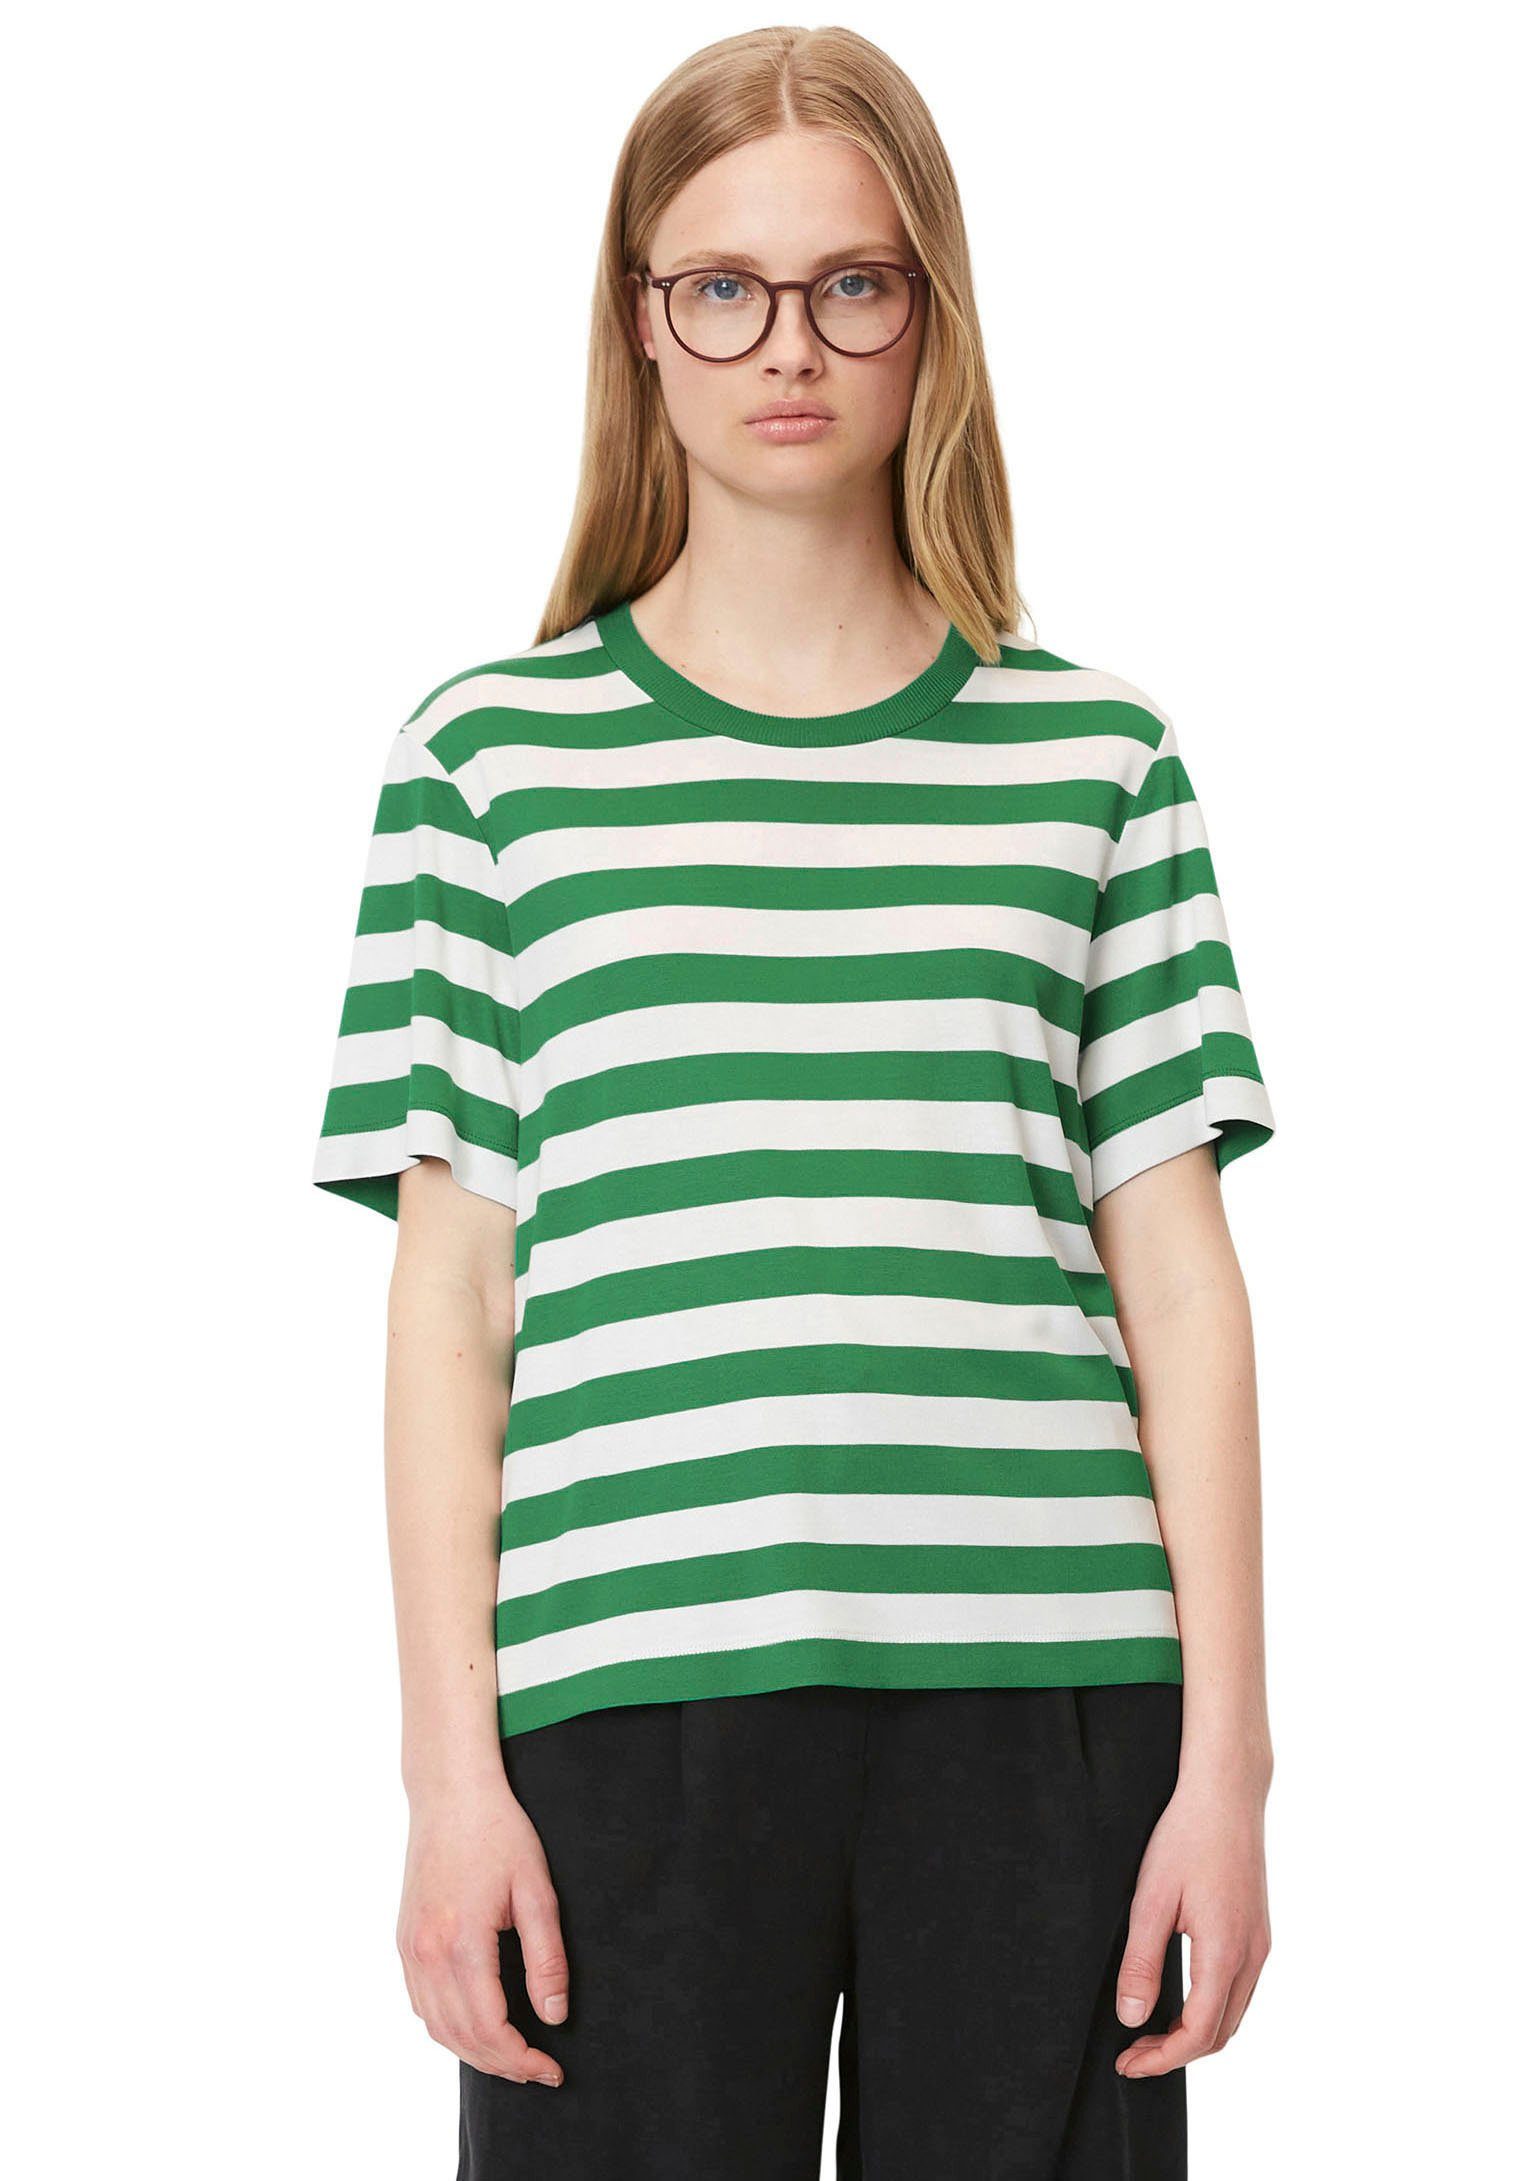 Marc O'Polo DENIM T-Shirt im Streifenmuster grün | T-Shirts